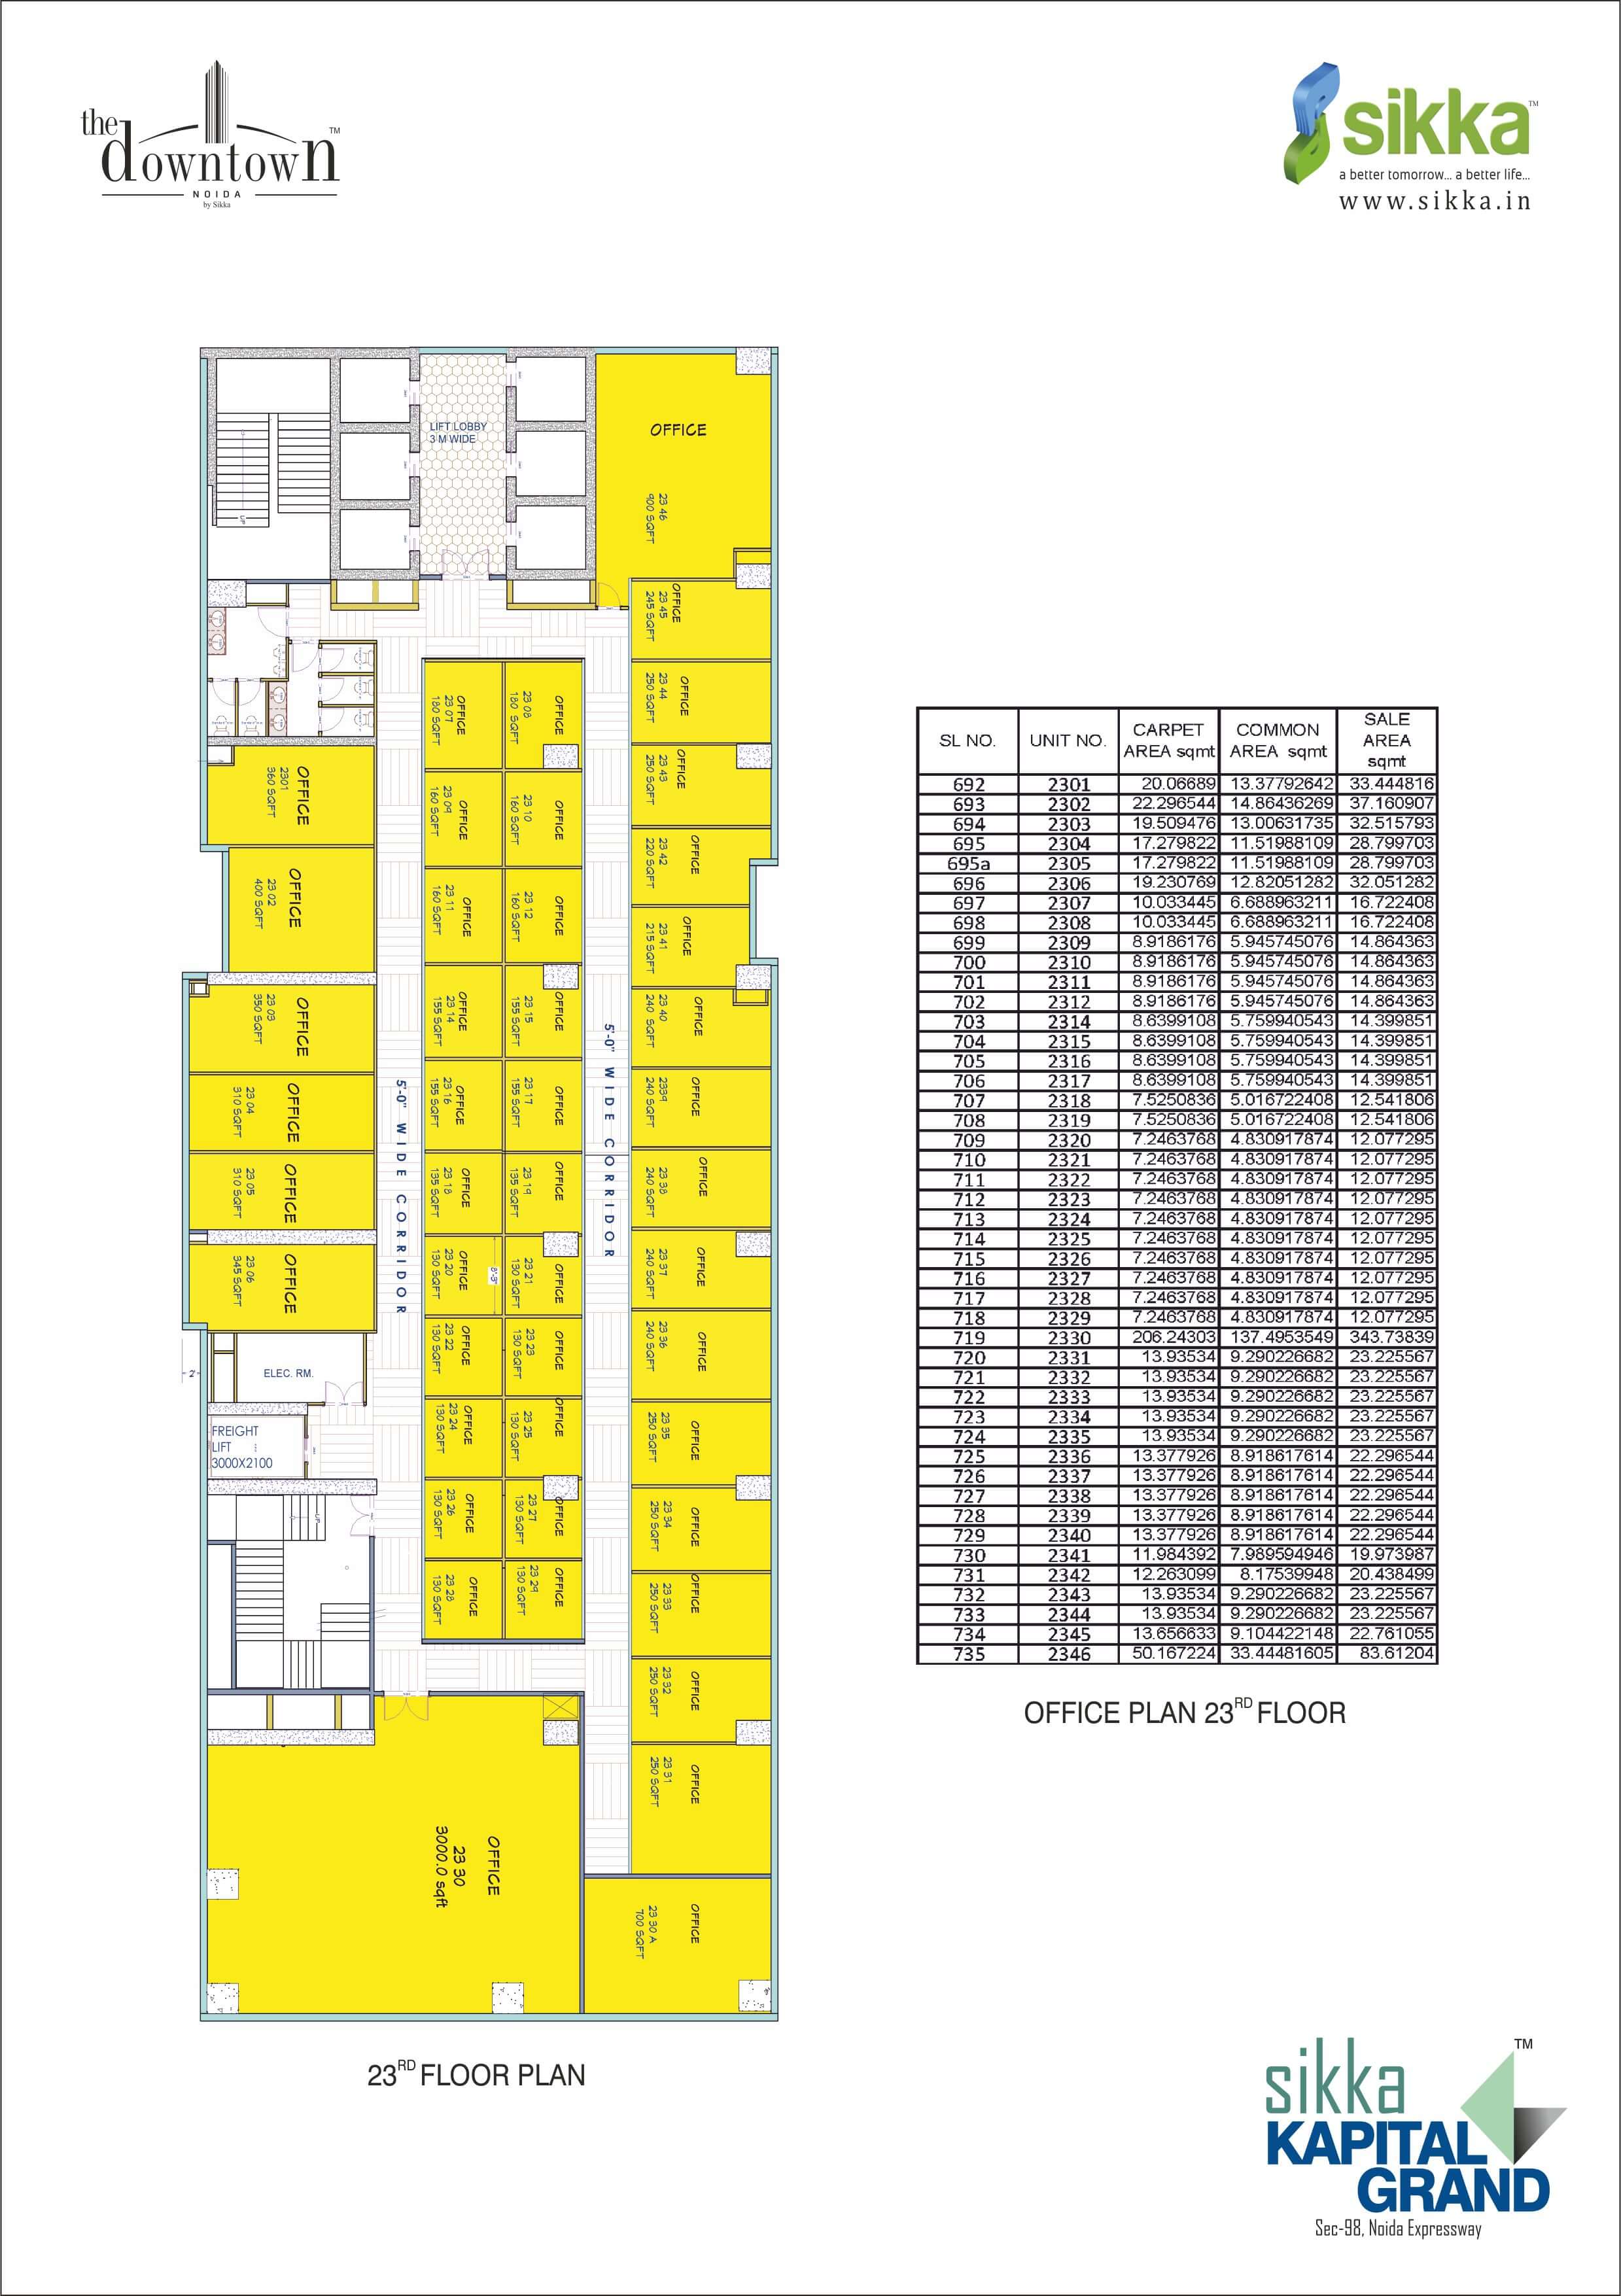 Kapital Grand - Office Plan 23rd Floor